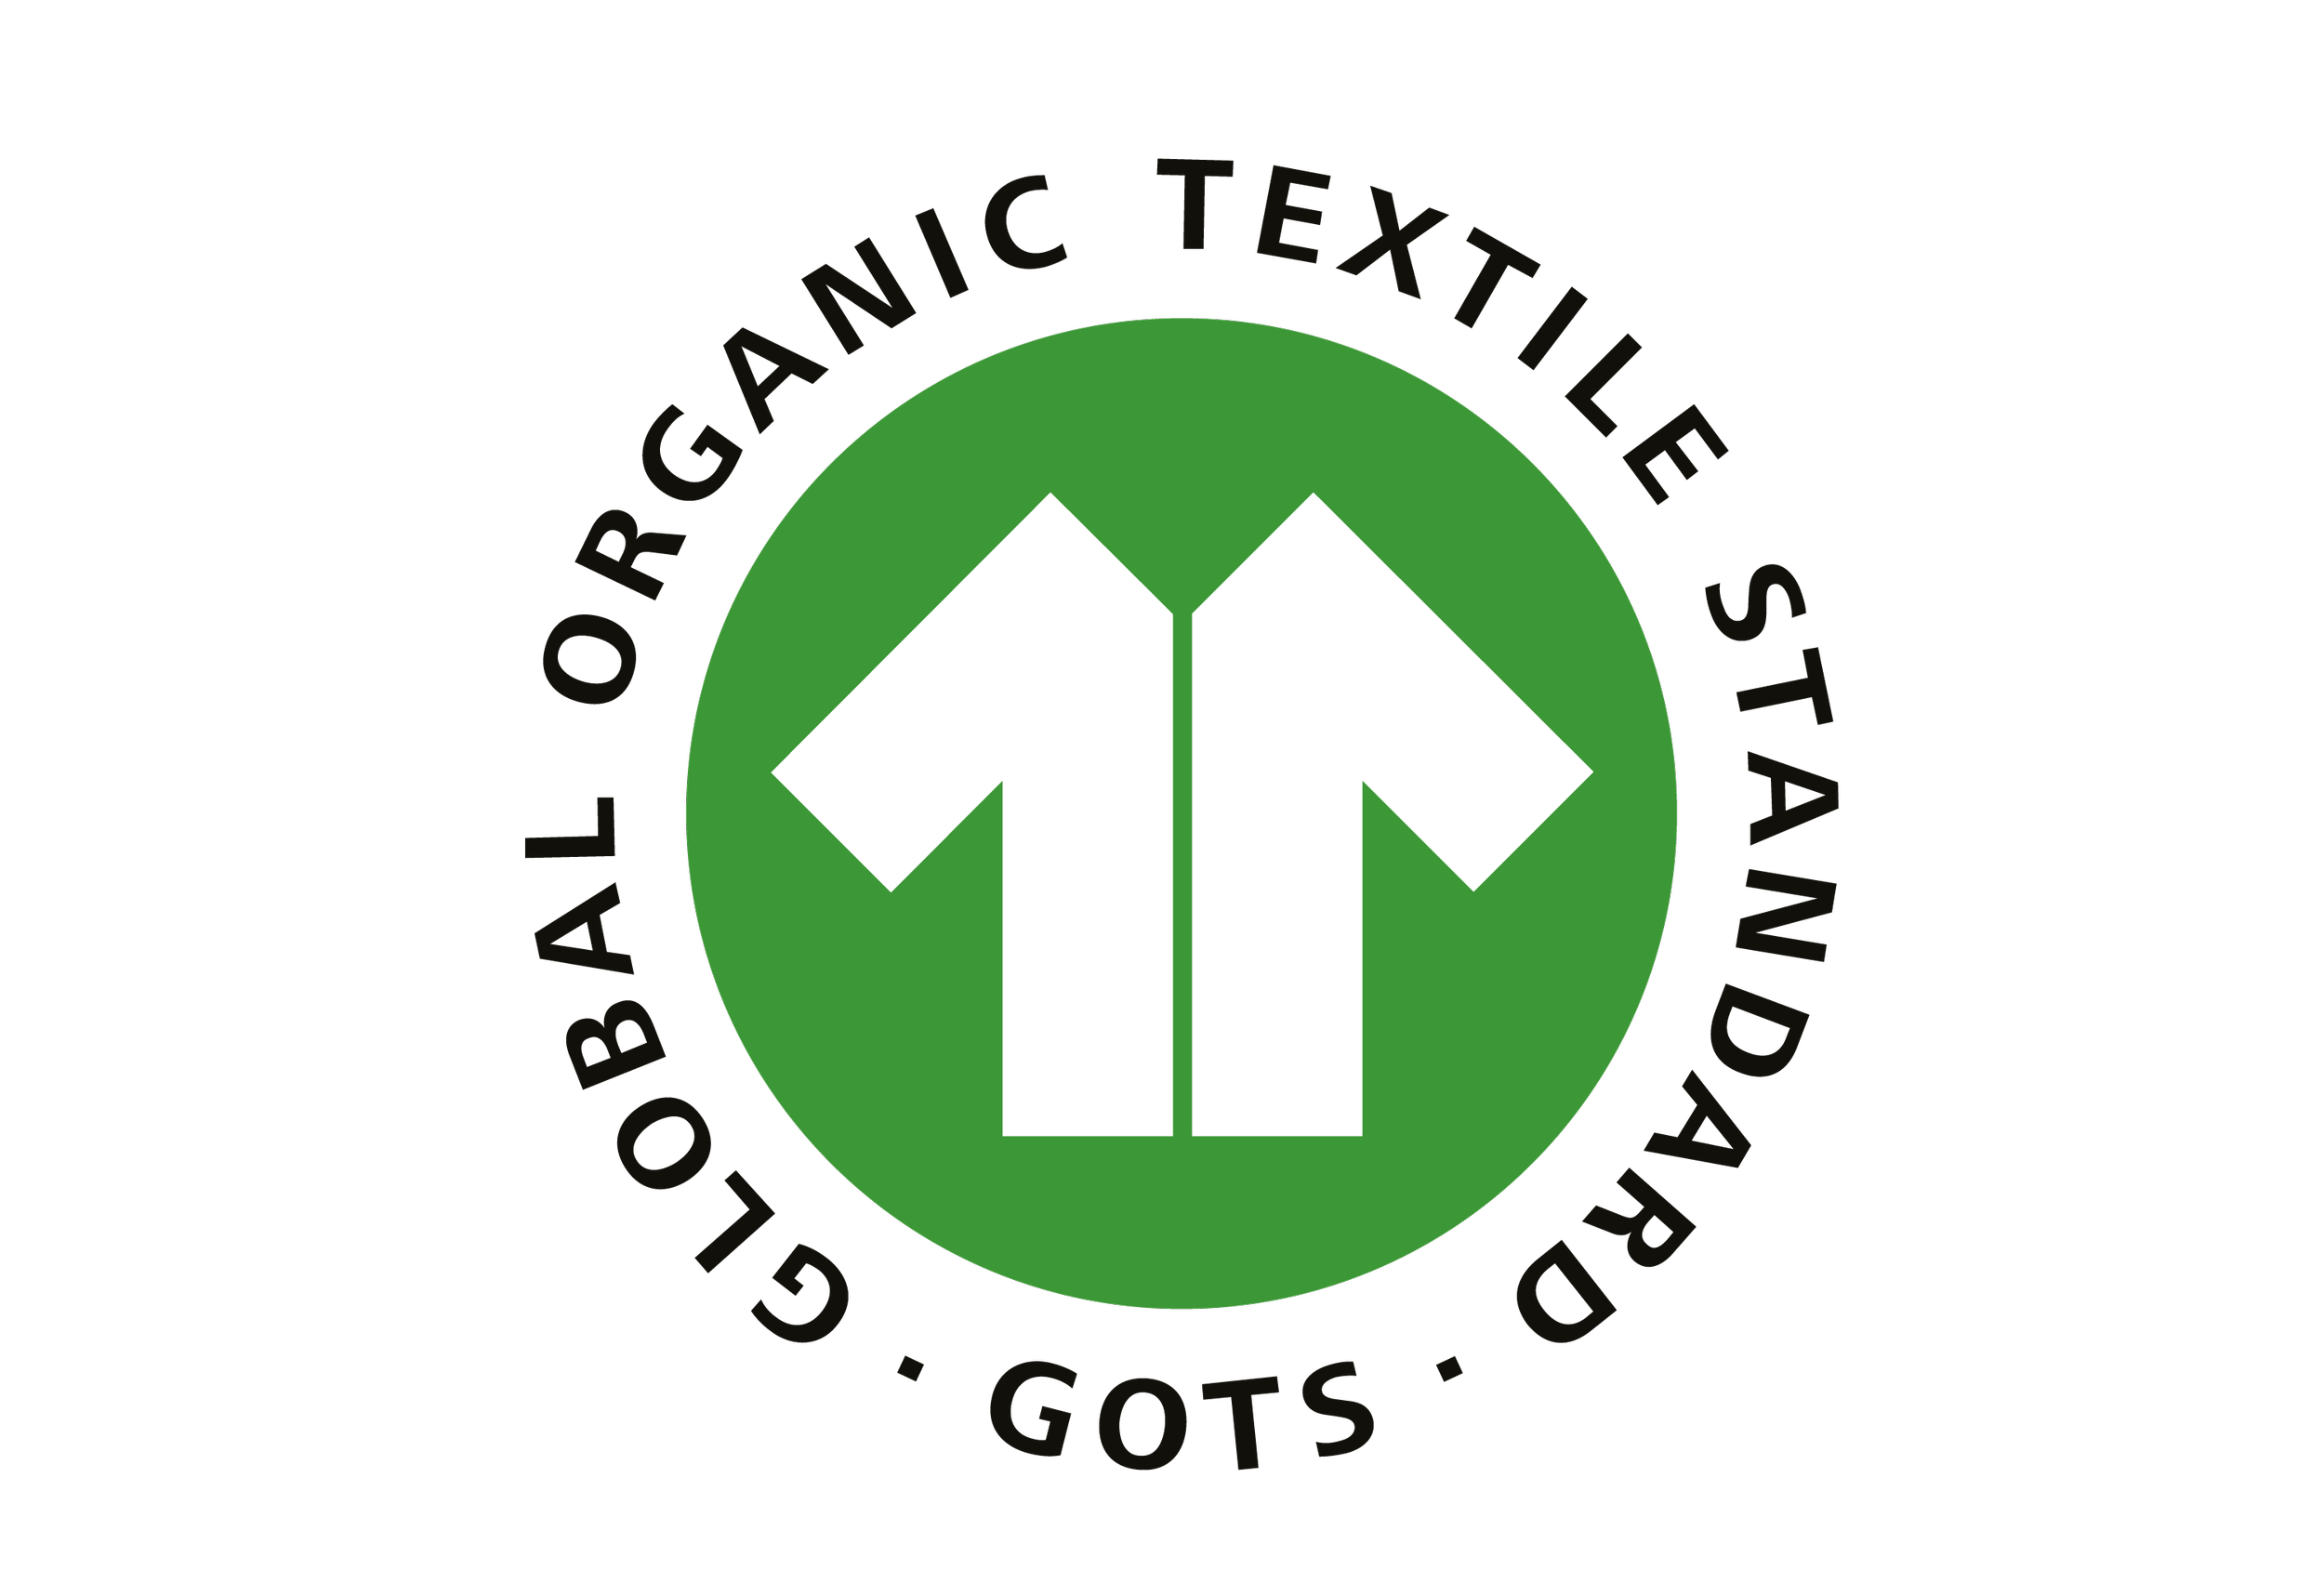 GOTS-Global-Organic-Textile-Standard.png